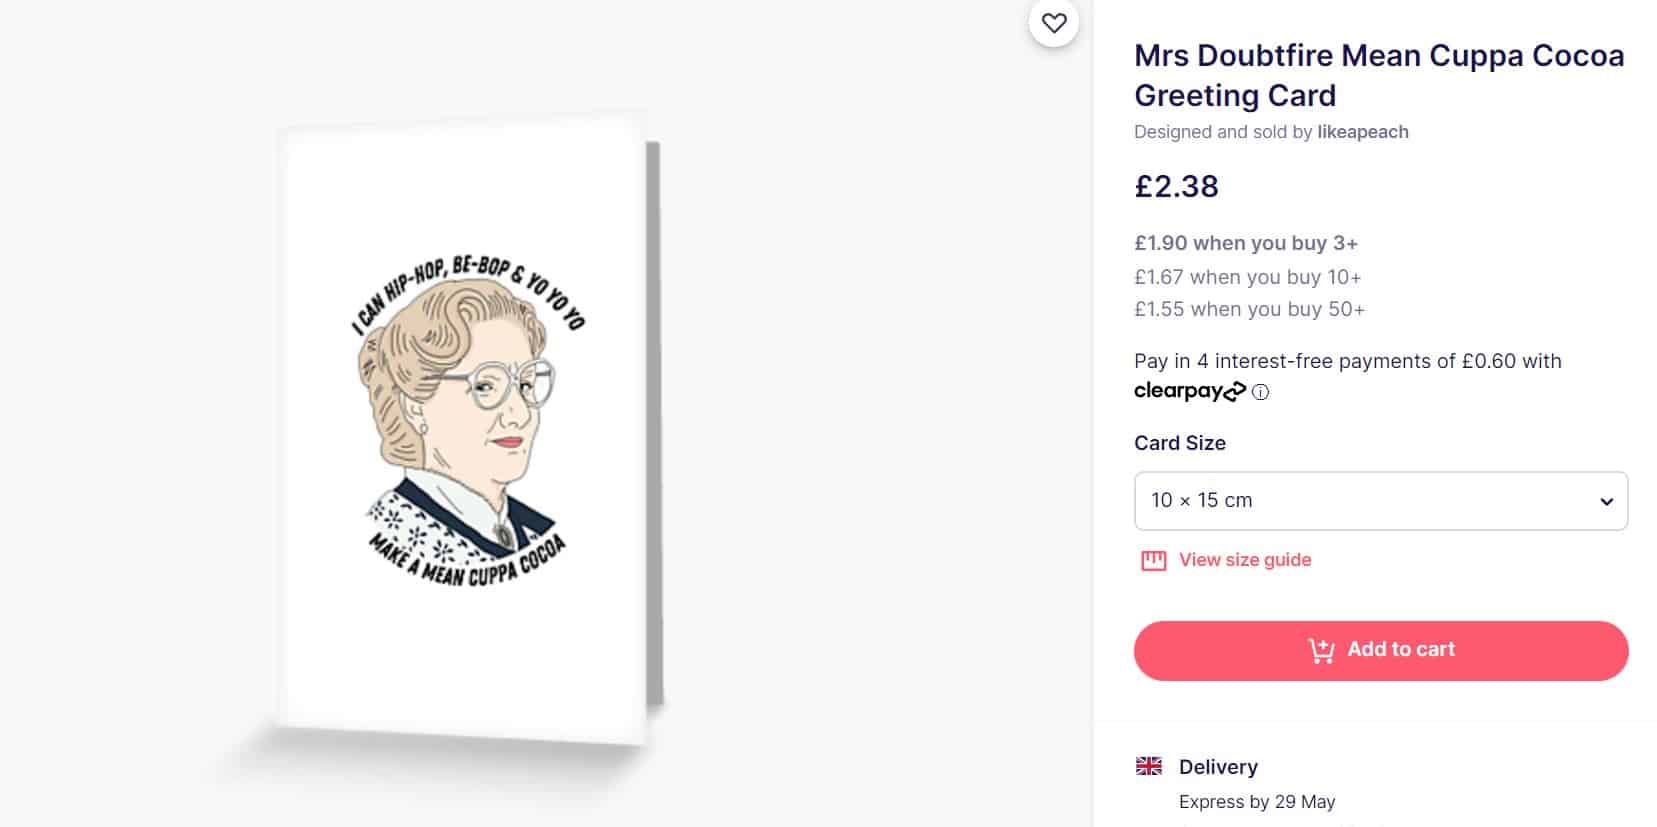 A pop-culture card featuring Mrs Doubtfire